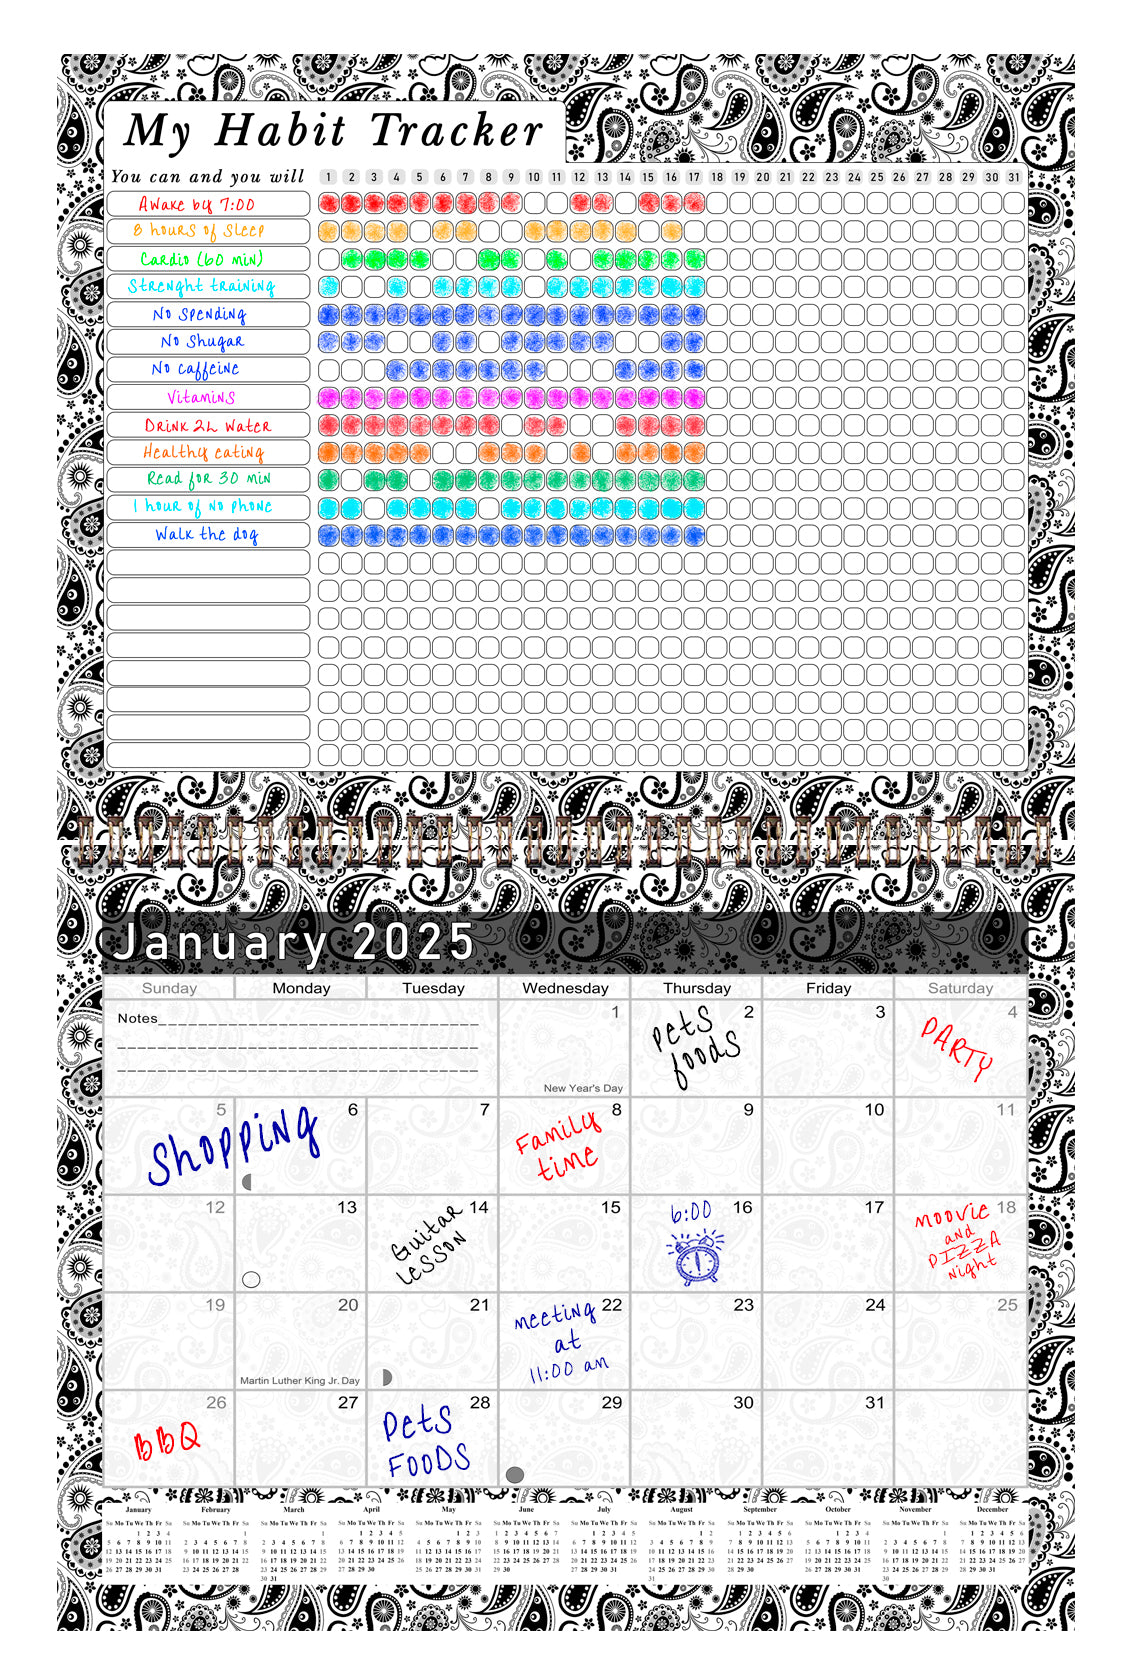 2025 Monthly Desktop/Wall Calendar/Planner - Habit Tracker - (Edition #11)